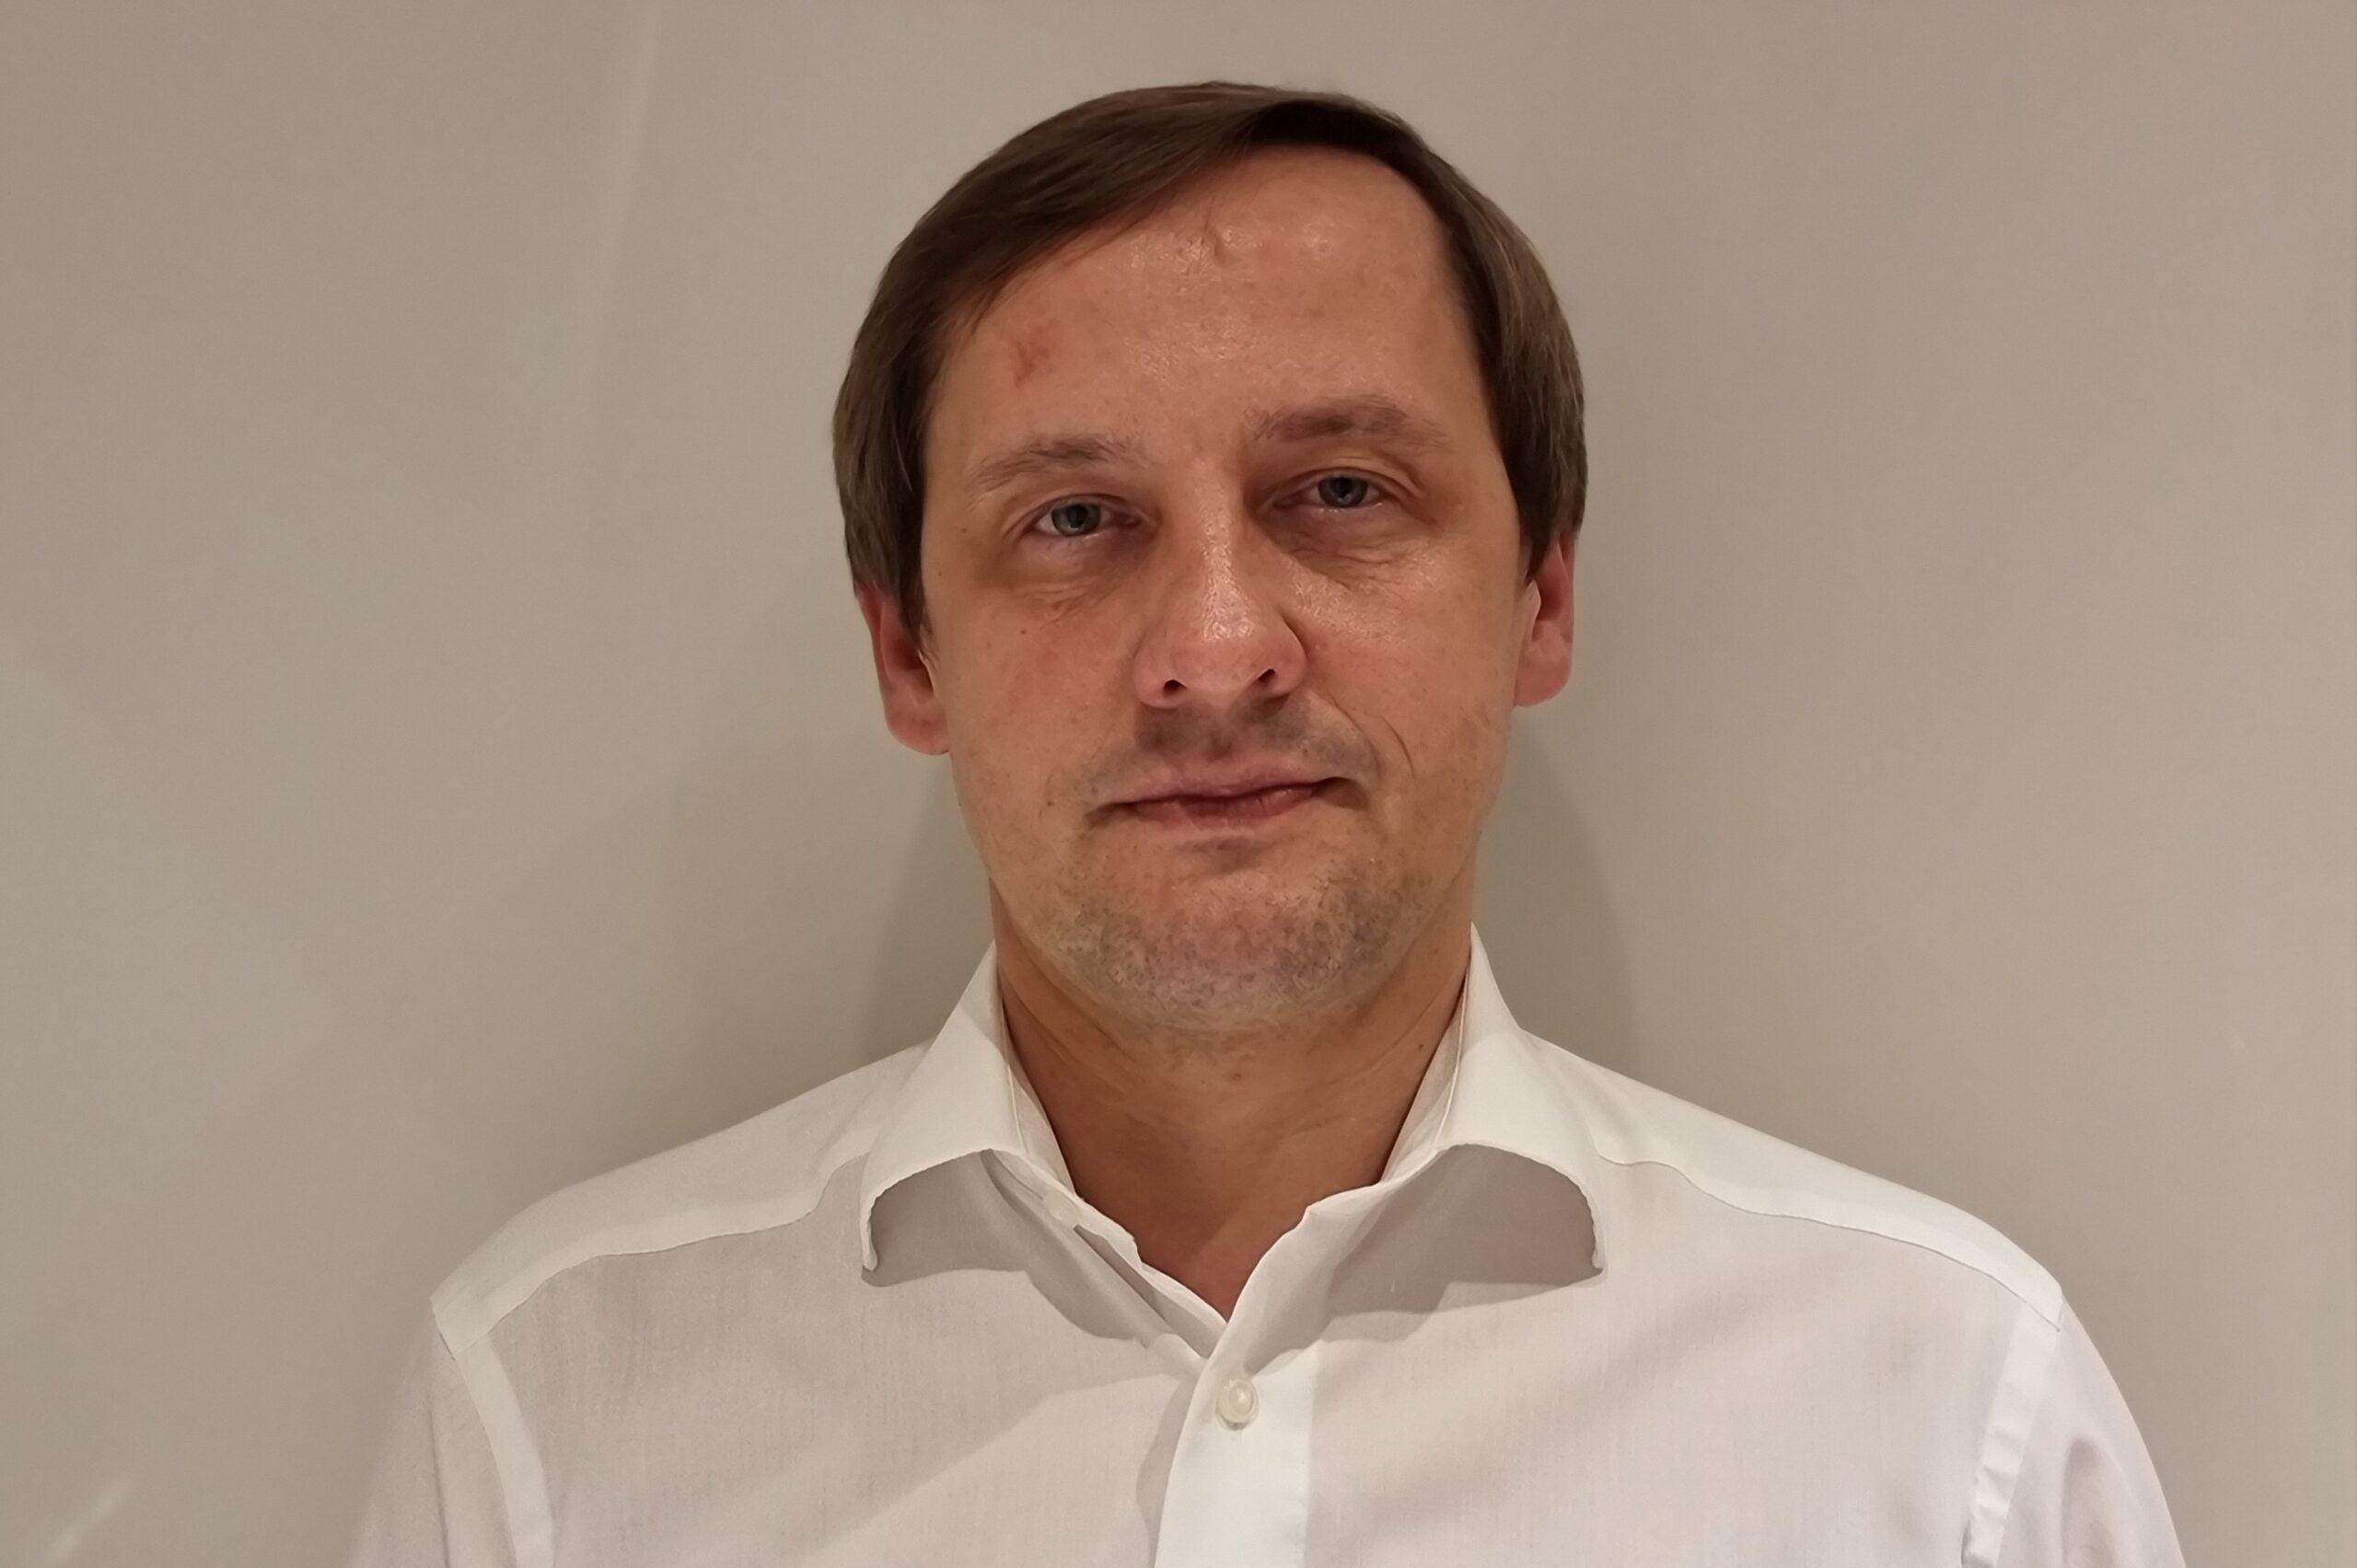 Juozas Vaznaitis joins addvantage as European Sales Director